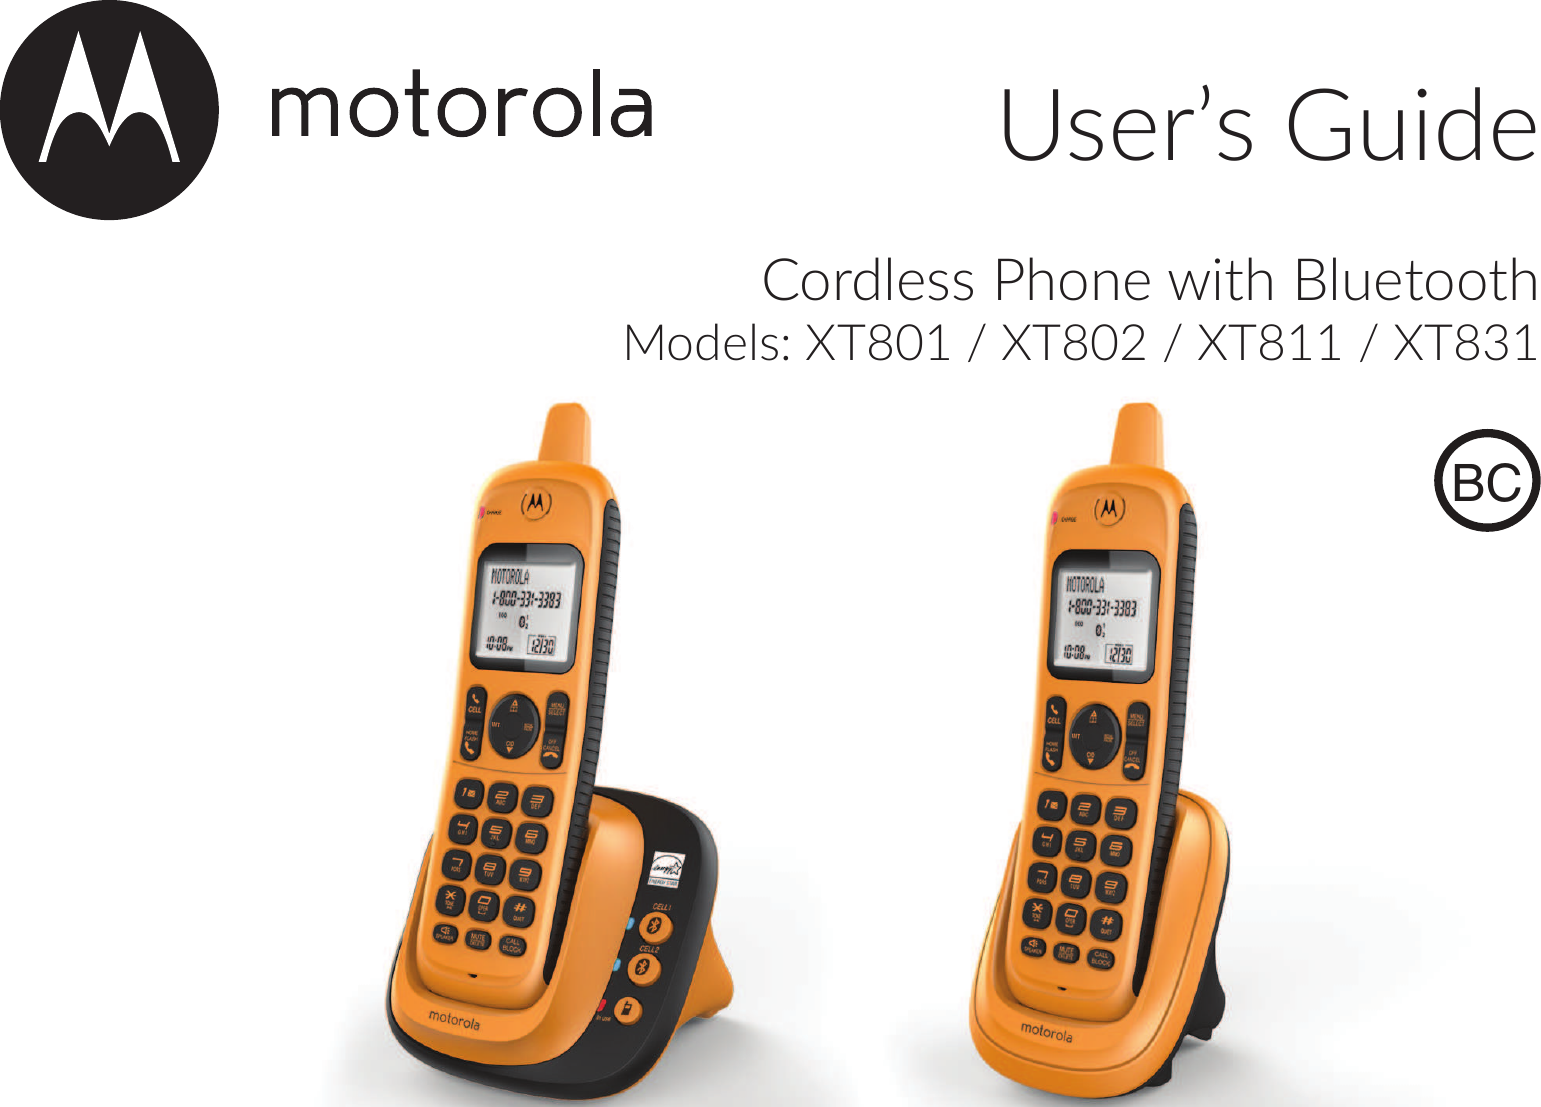 User’s GuideCordless Phone with Bluetooth Models: XT801 / XT802 / XT811 / XT831BC